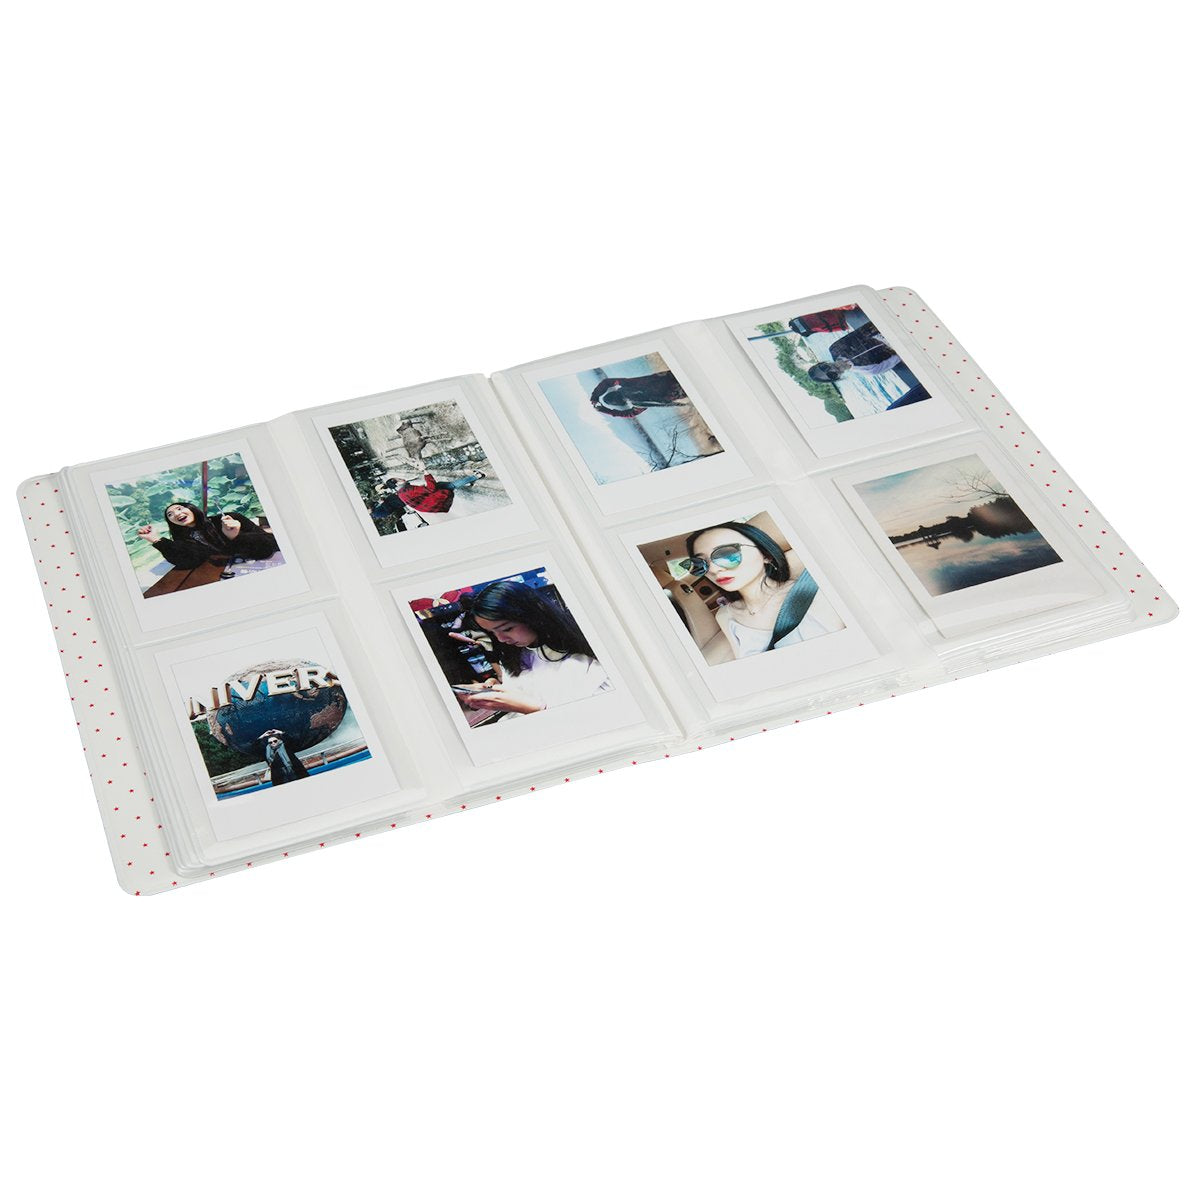 CAIUL 128 Pockets  Album for  Instax Mini 7s 8 8+ 9 25 26 50s 70 90 Film, Polaroid PIC300 Z2300 Film (Flamingo Pink)